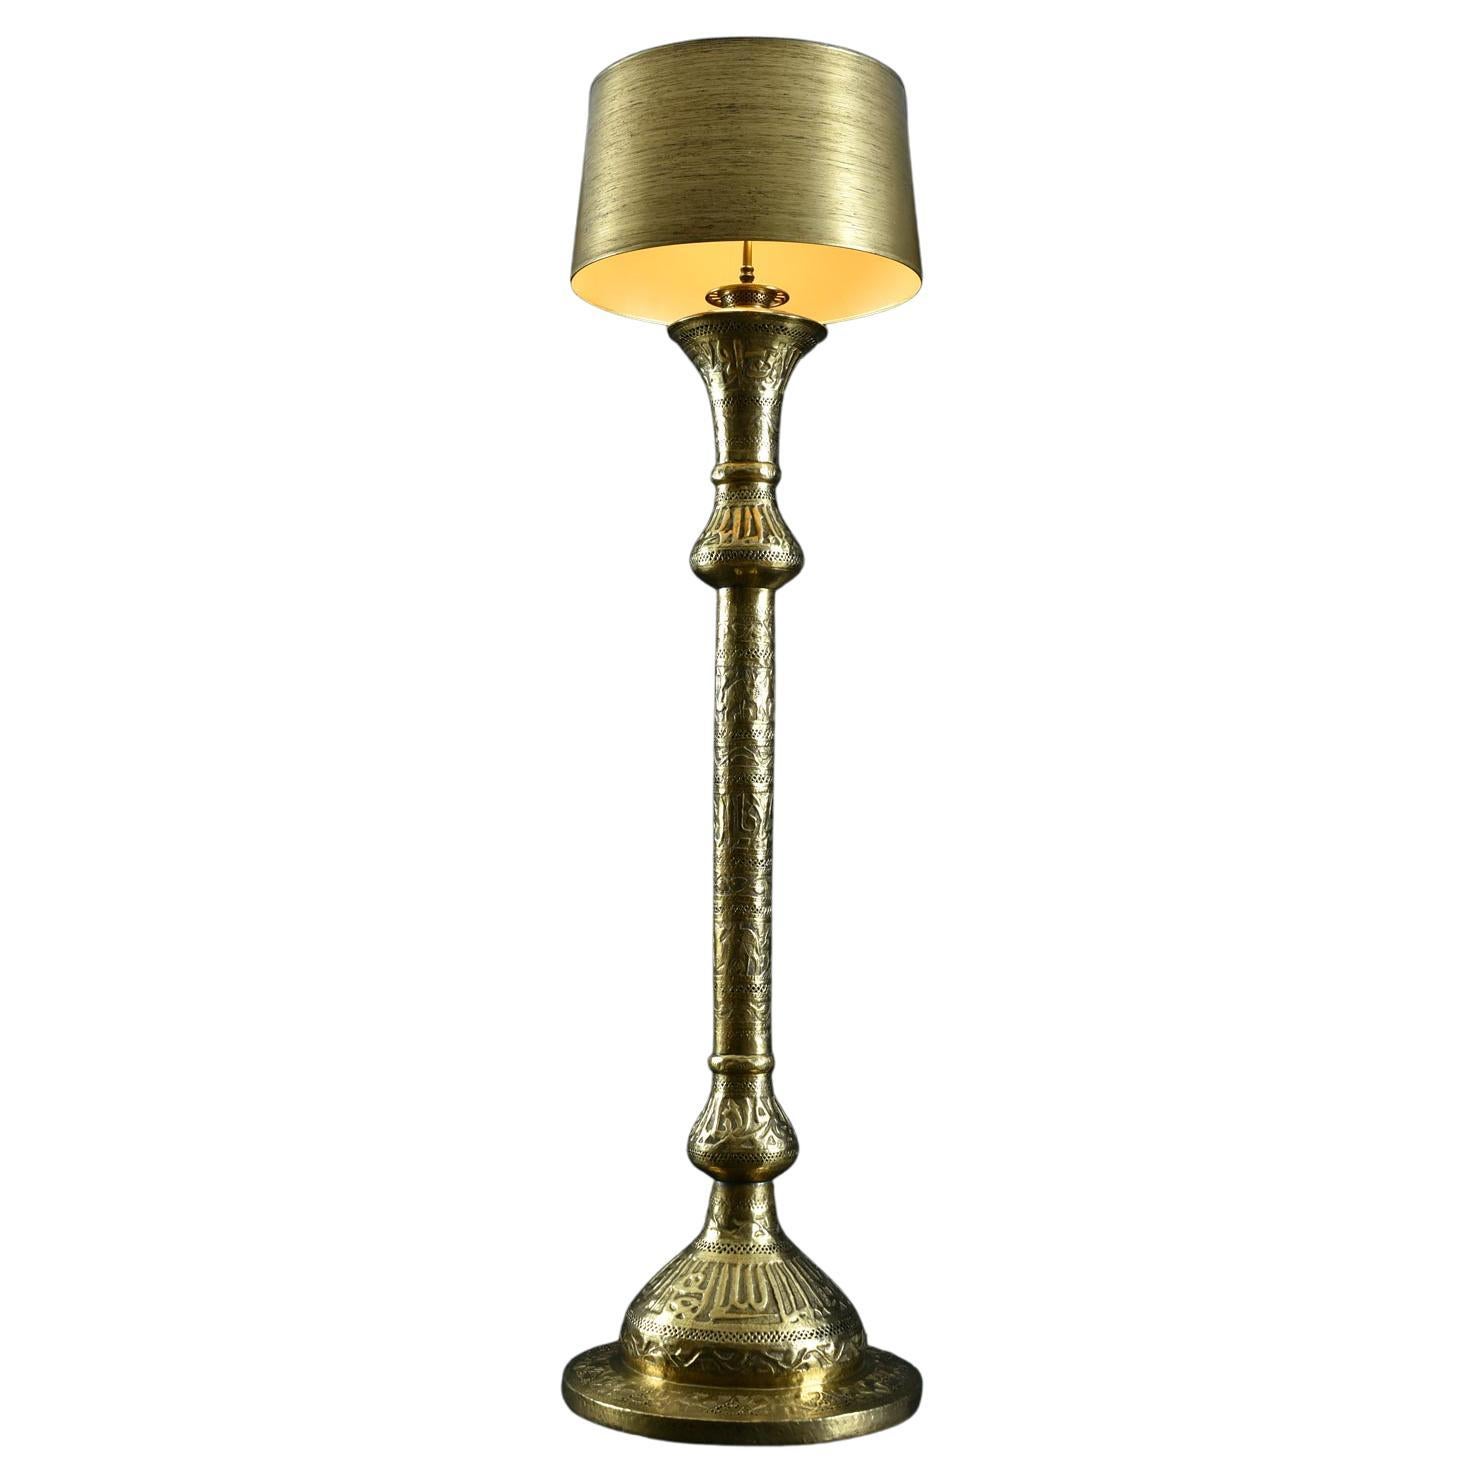 https://a.1stdibscdn.com/middle-eastern-moorish-style-hammered-pierced-brass-floor-lamp-for-sale/f_22553/f_259328621635789504098/f_25932862_1635789504419_bg_processed.jpg